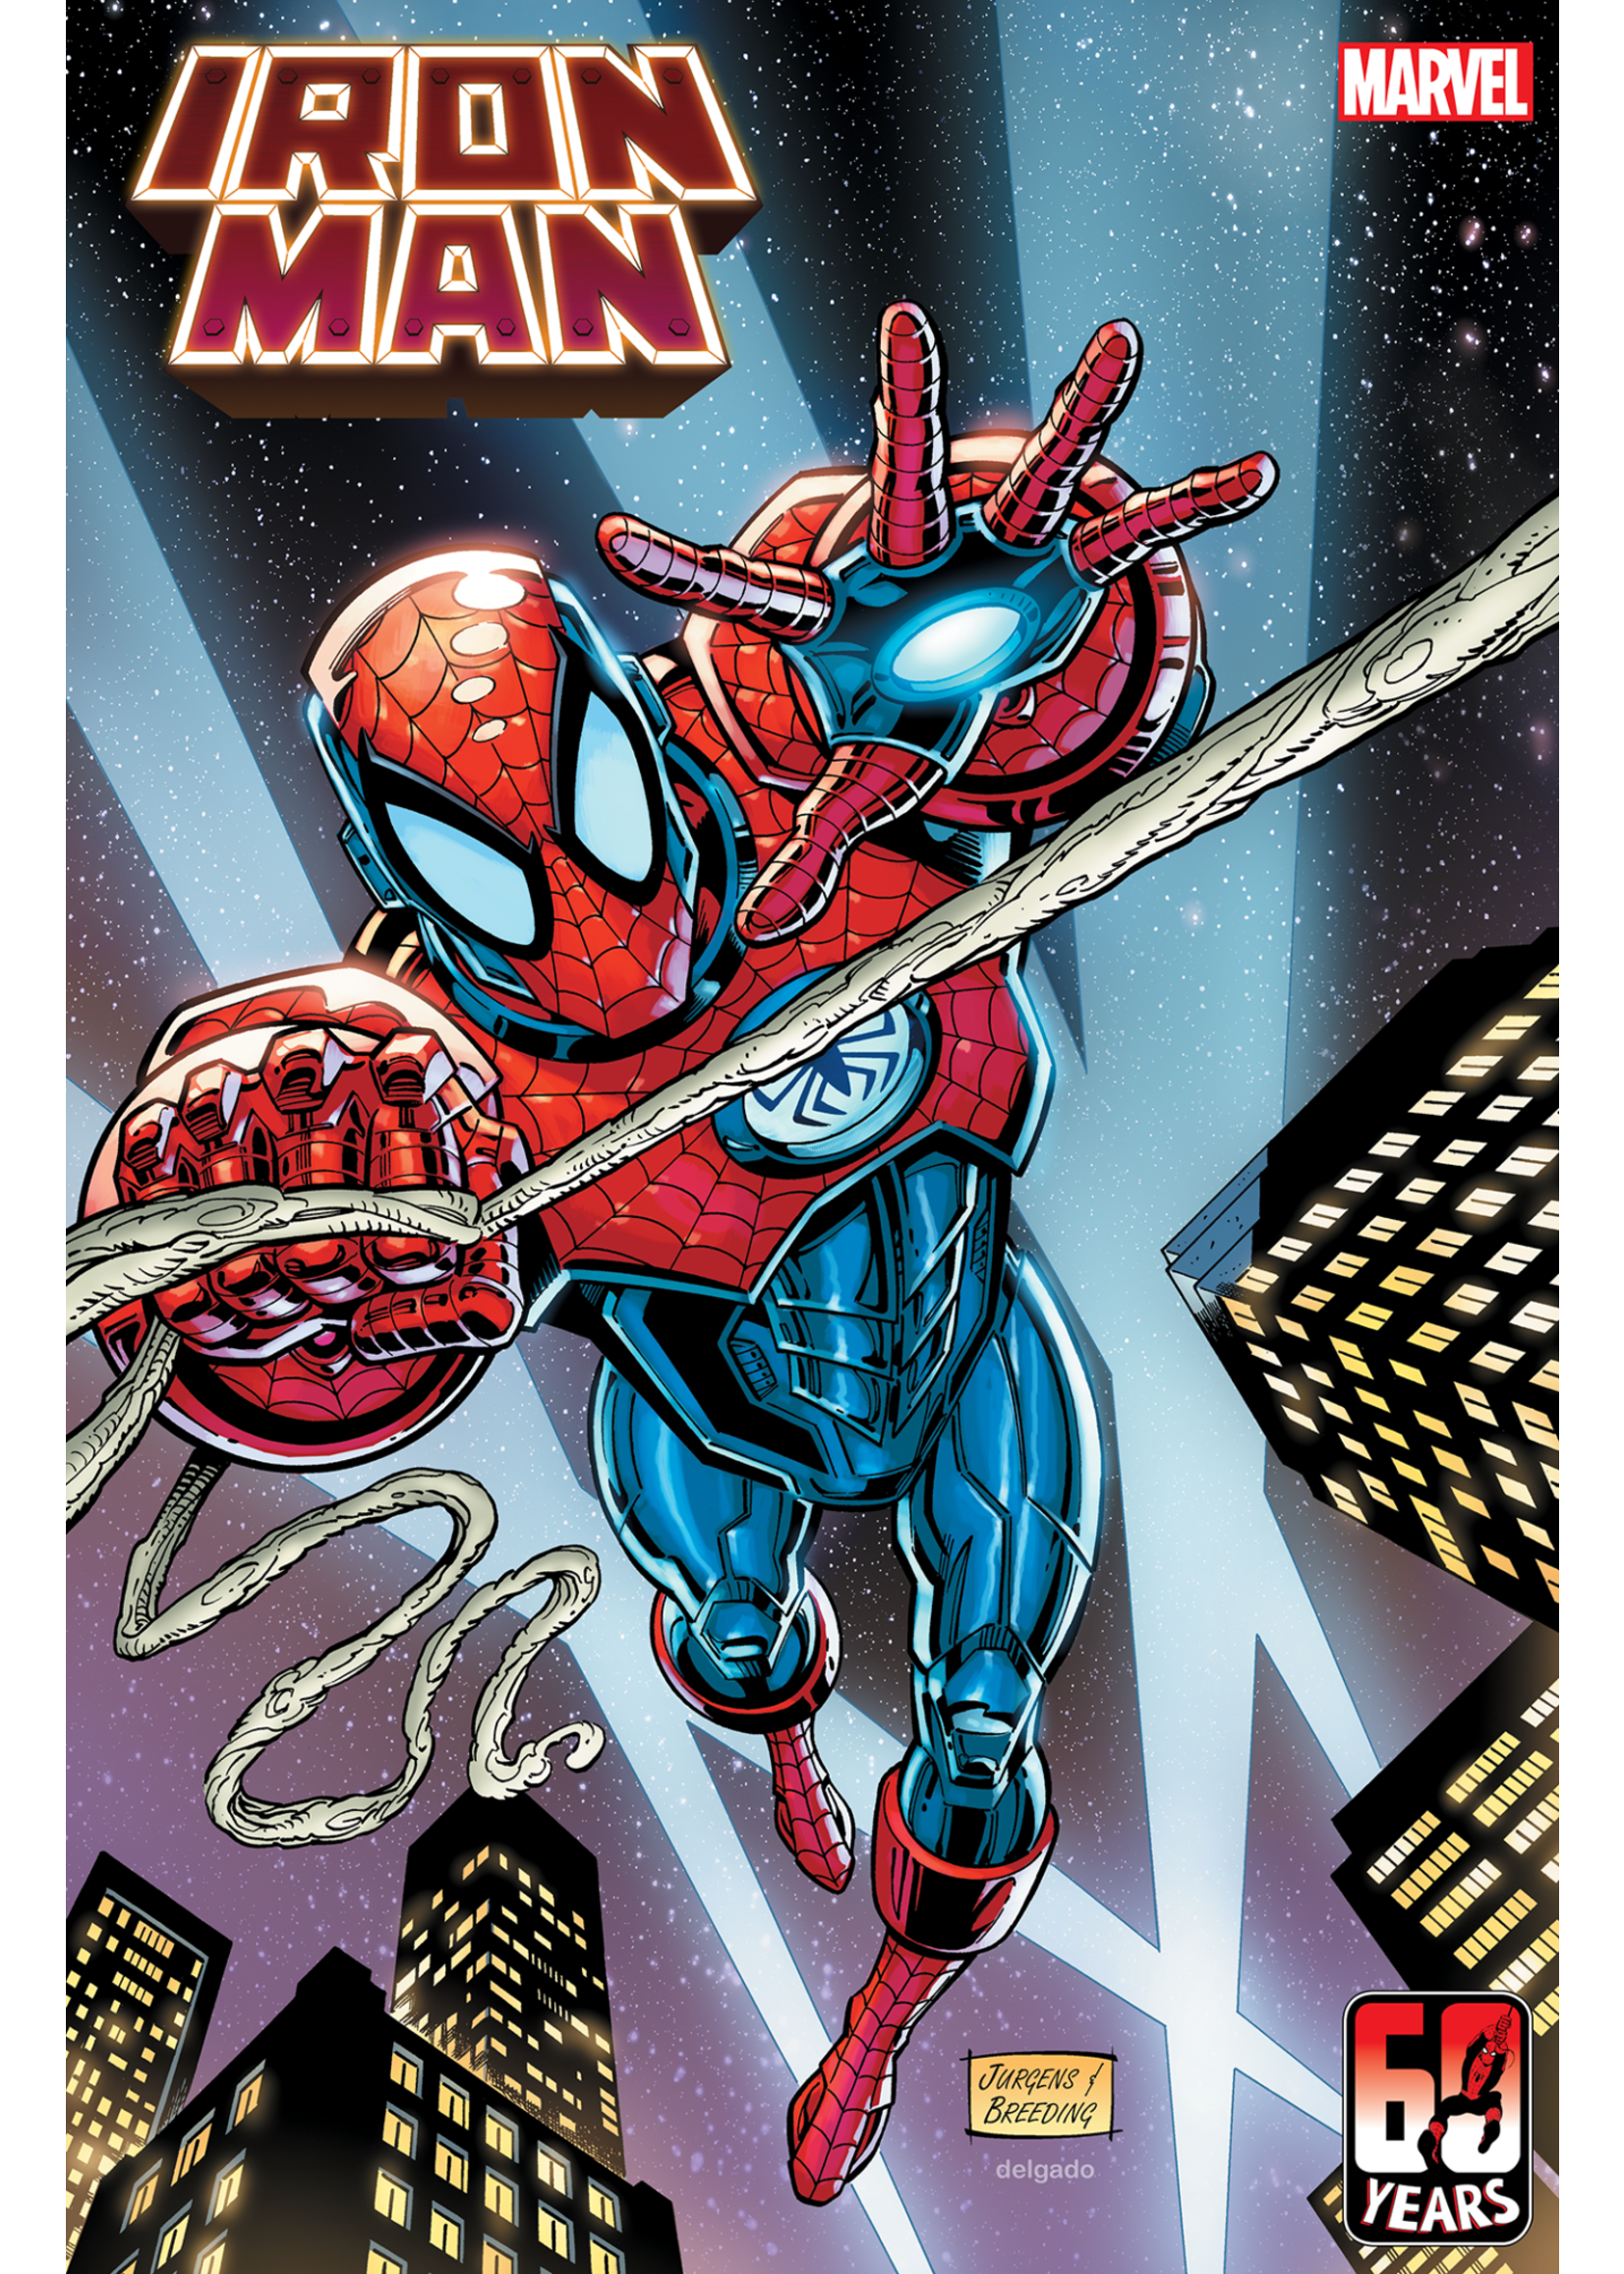 Avengers Iron Man #19